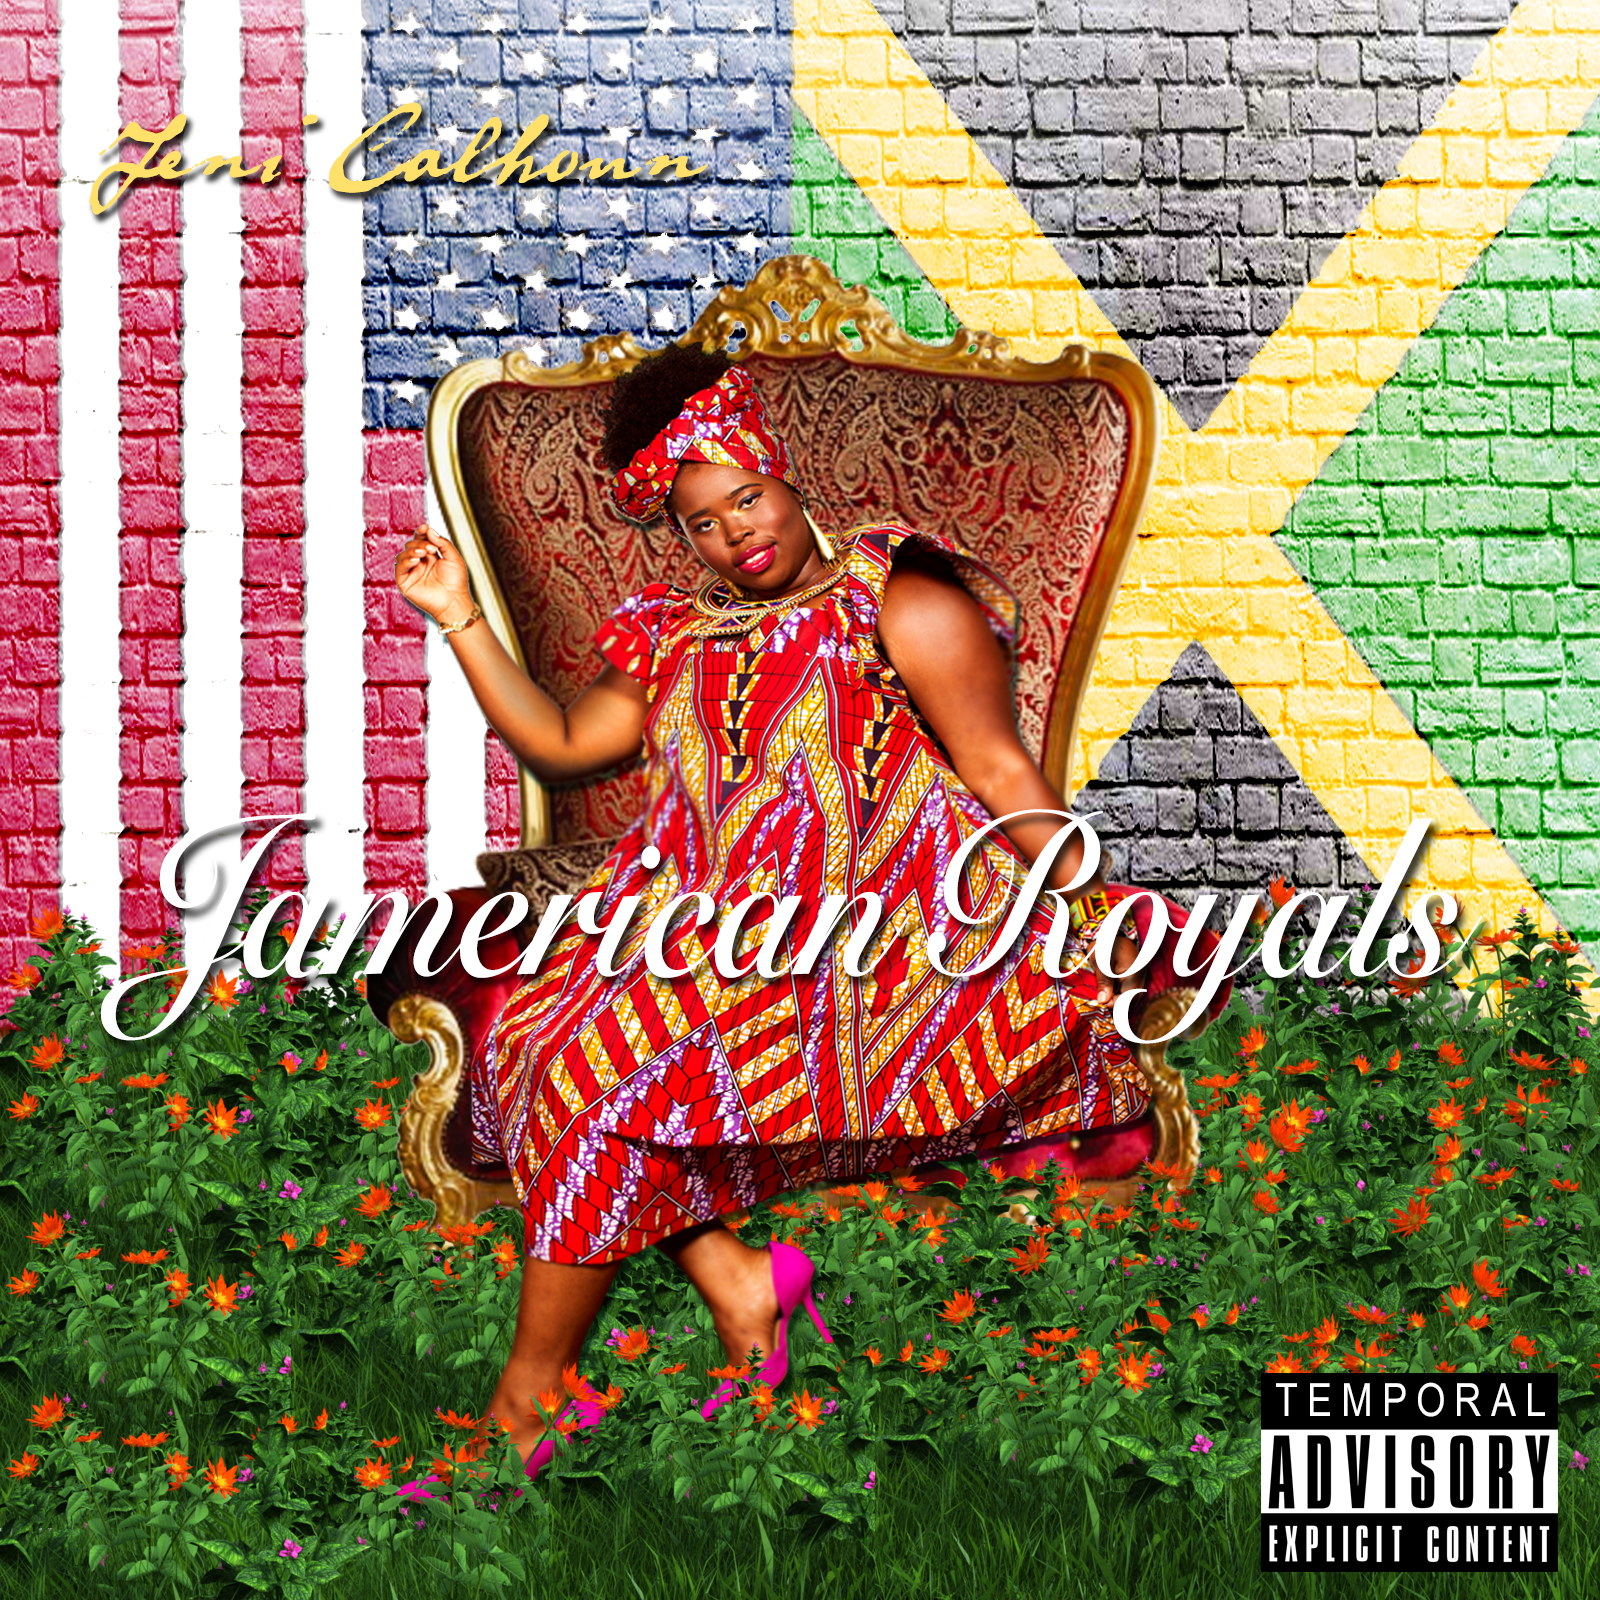 Jamerican Royals Cover.png